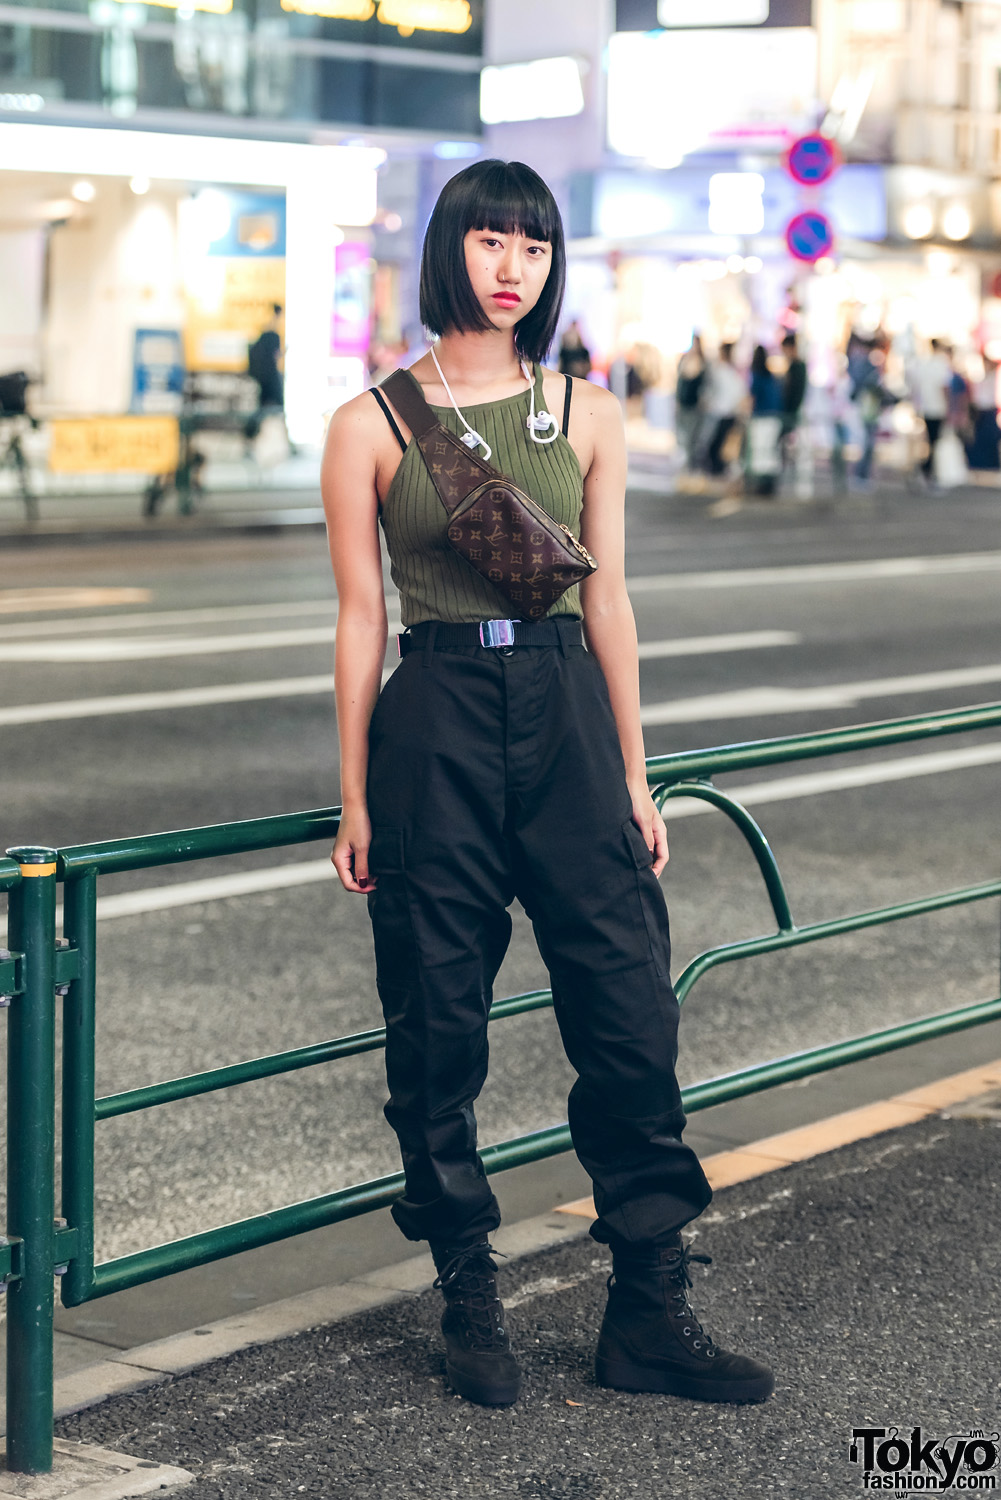 Harajuku Girl in Military Inspired Street Fashion w/ H&M, Rothco